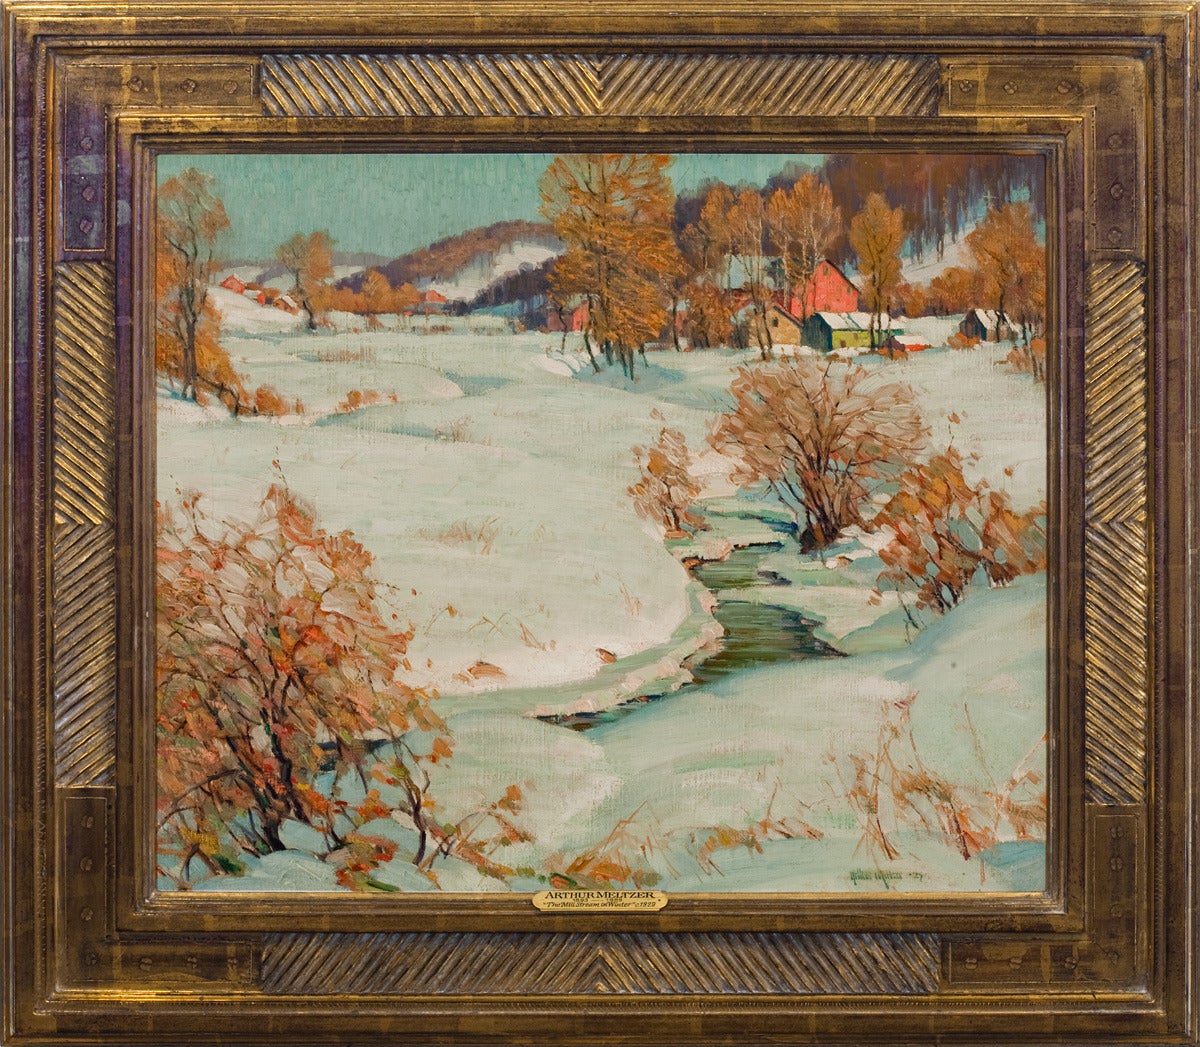 Arthur Meltzer Landscape Painting - "The Mill Stream"